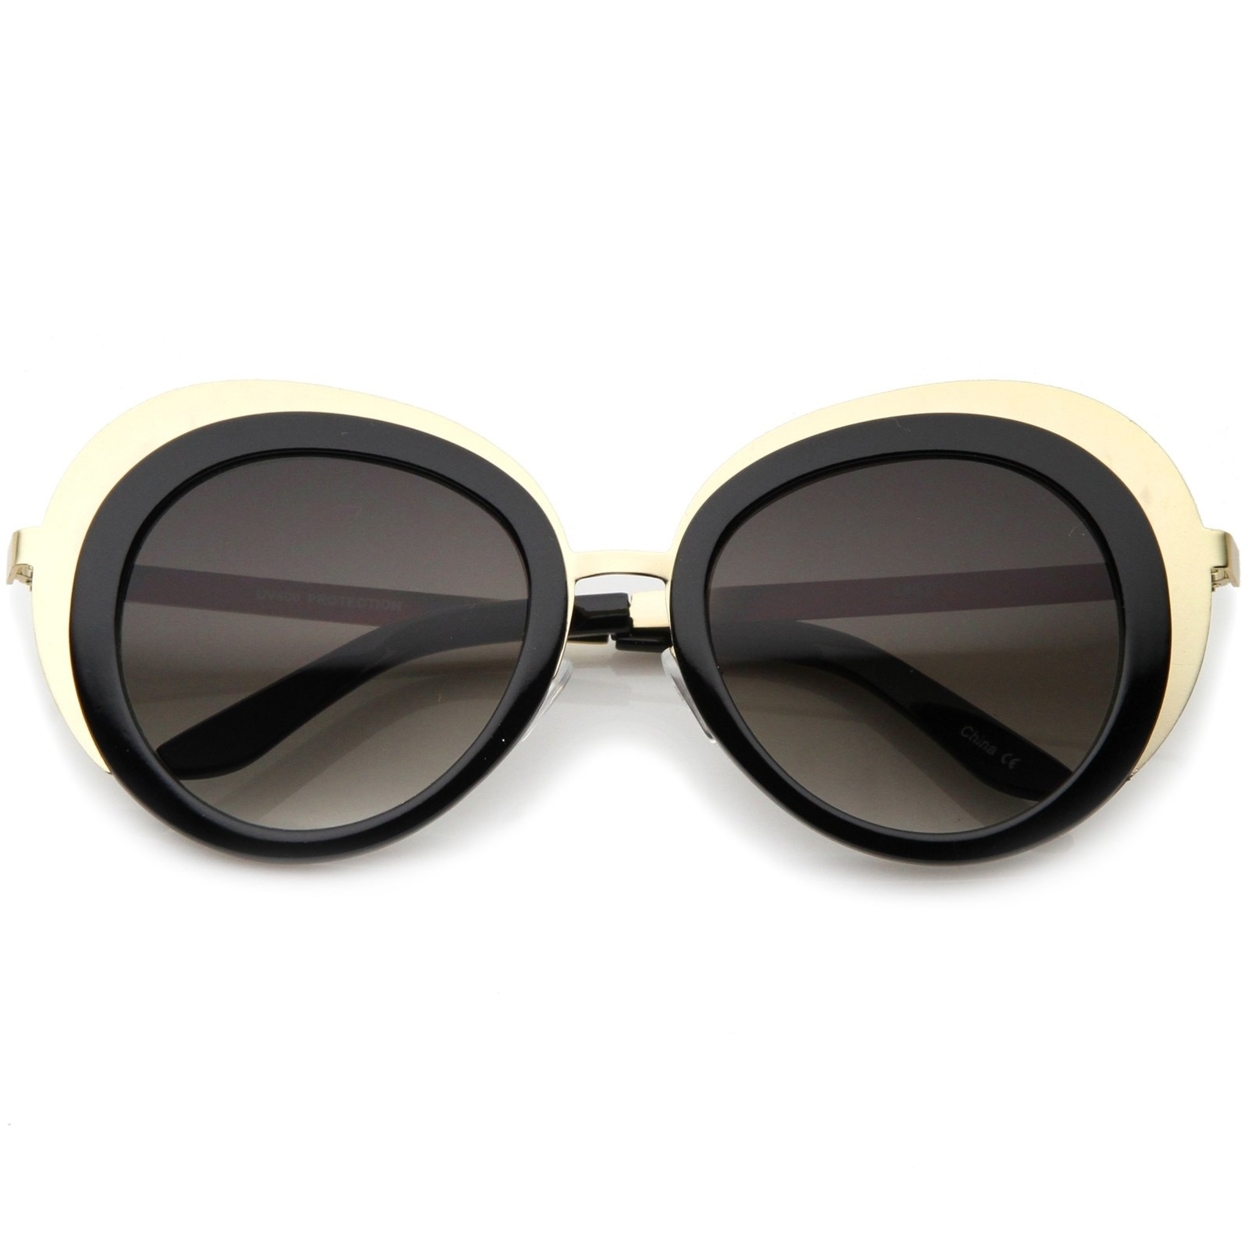 Women's Oversize Two-Tone Metal Frame Border Round Sunglasses 50mm - Silver-Black / Smoke